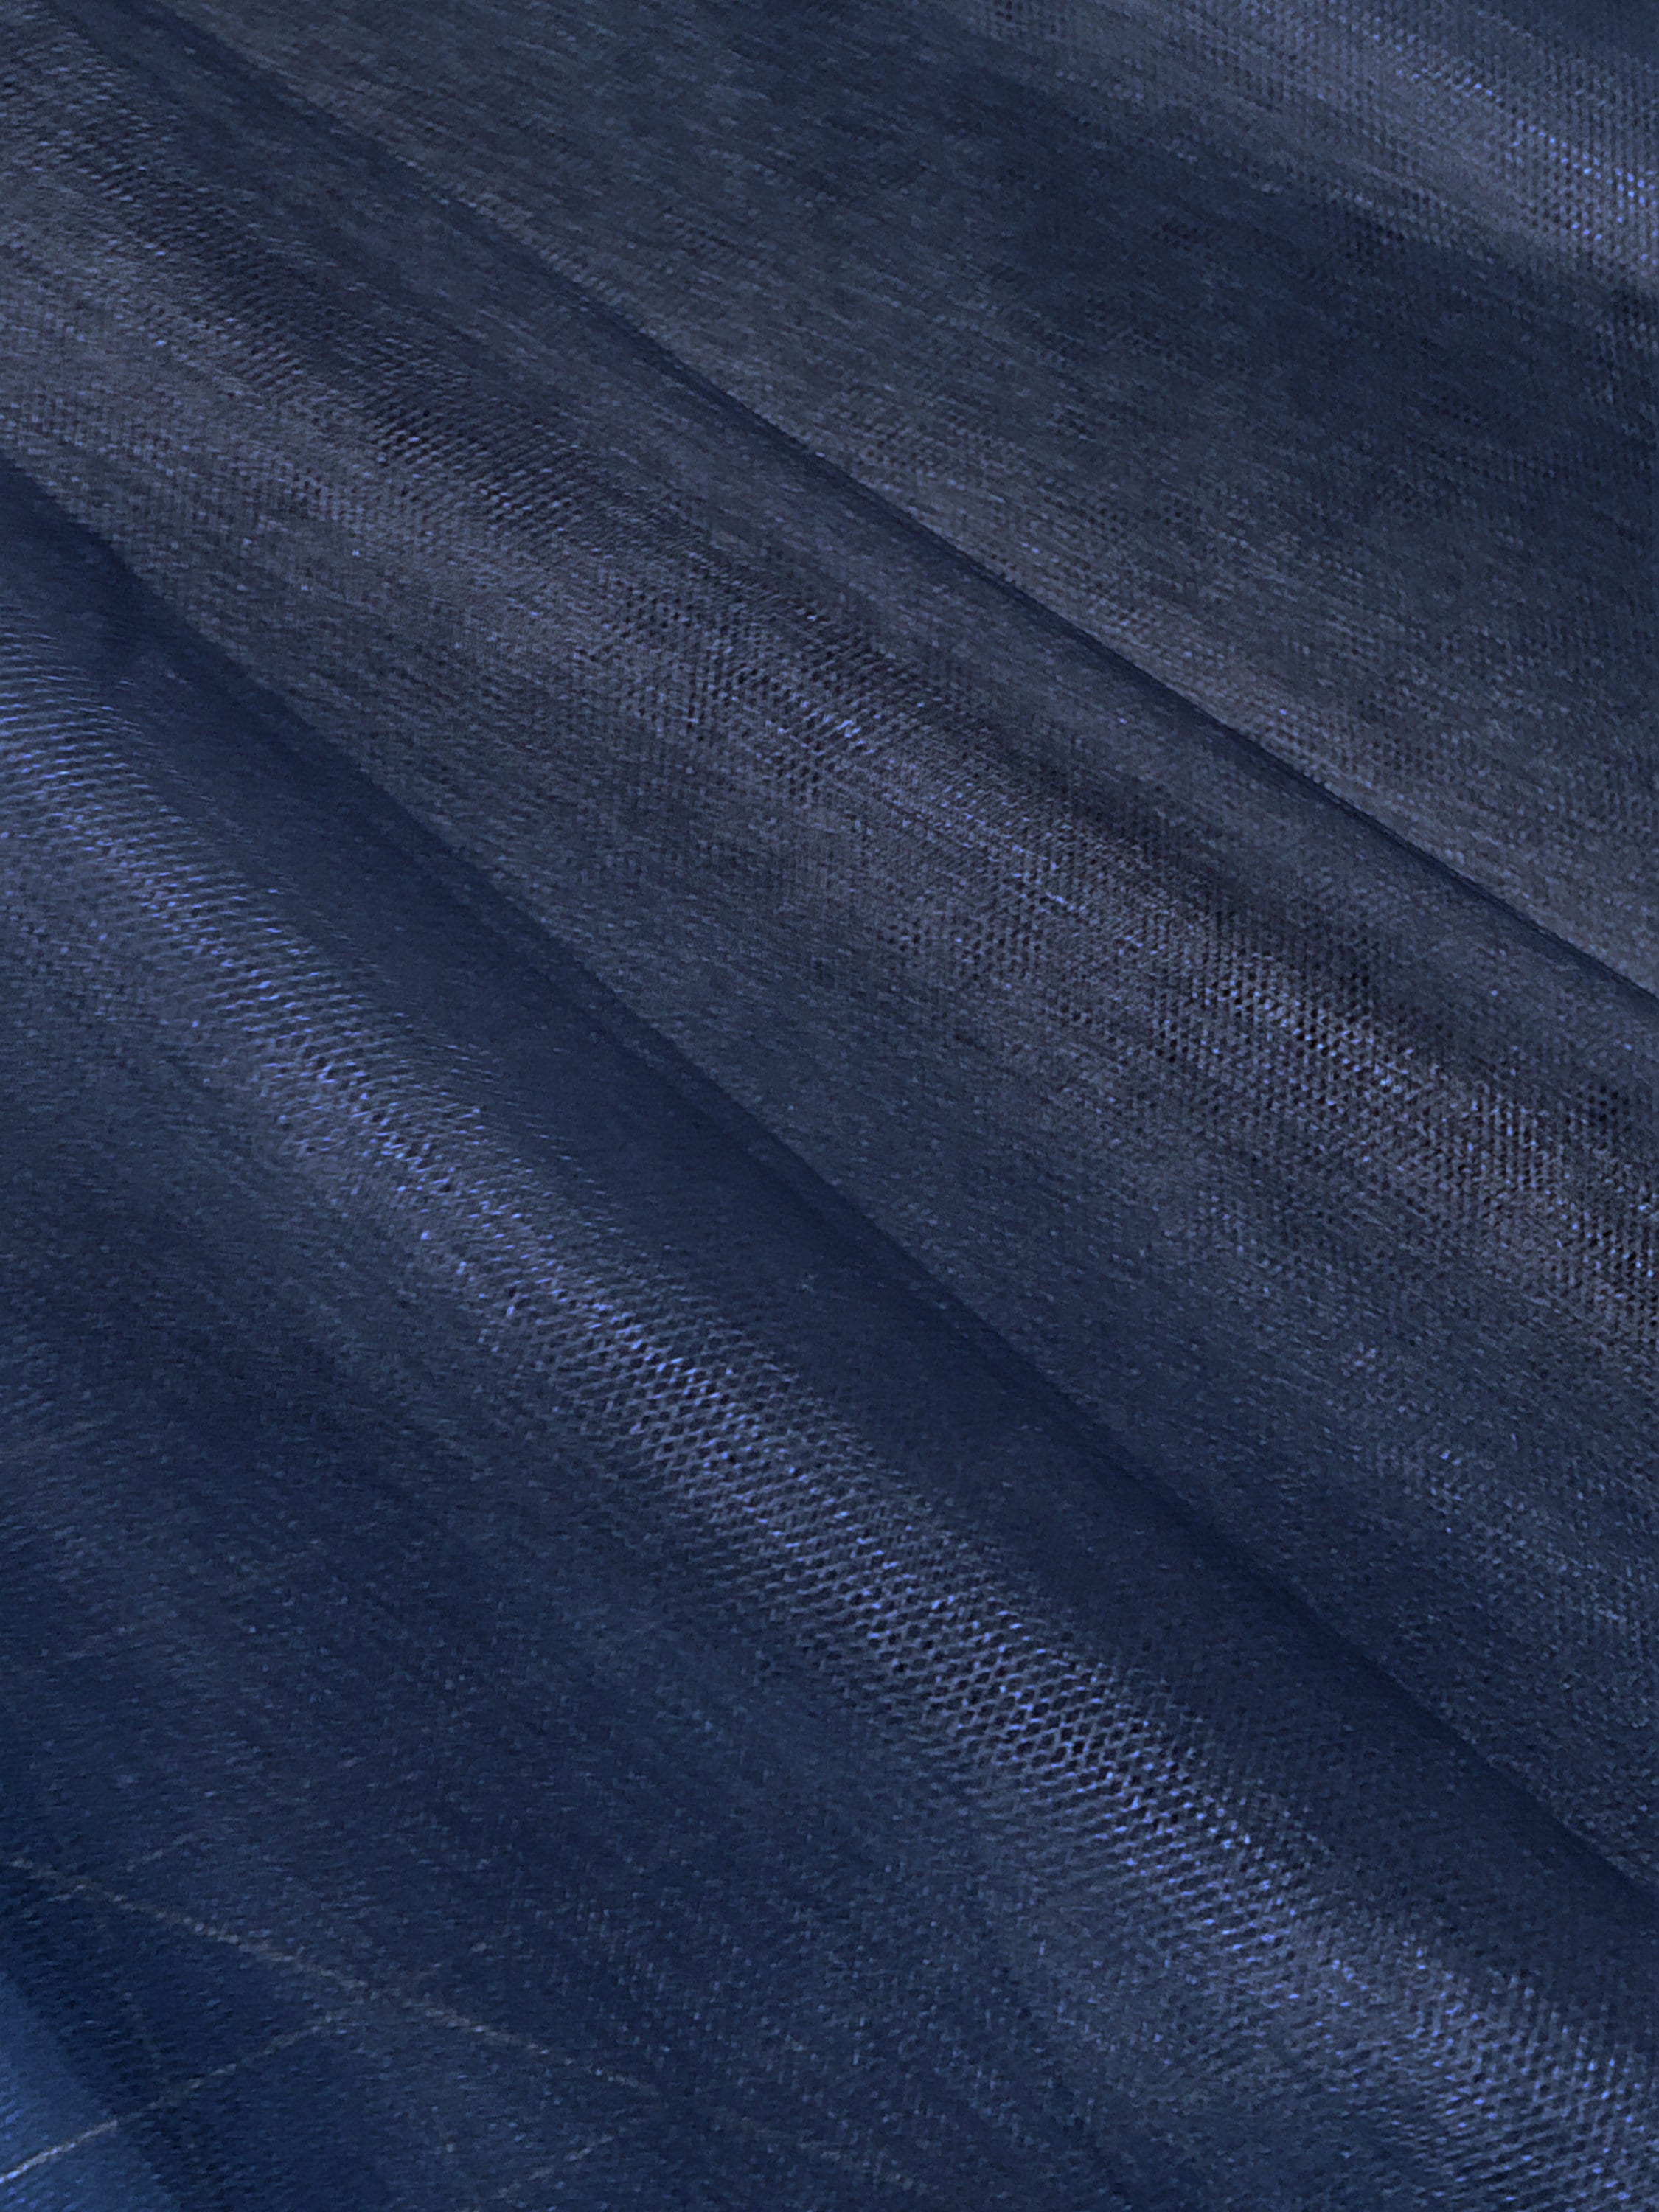 54 W Standard Royal Navy Blue Glitter Sparkle Stretch Tulle Fabric Price  per Yard 2-way Stretch 